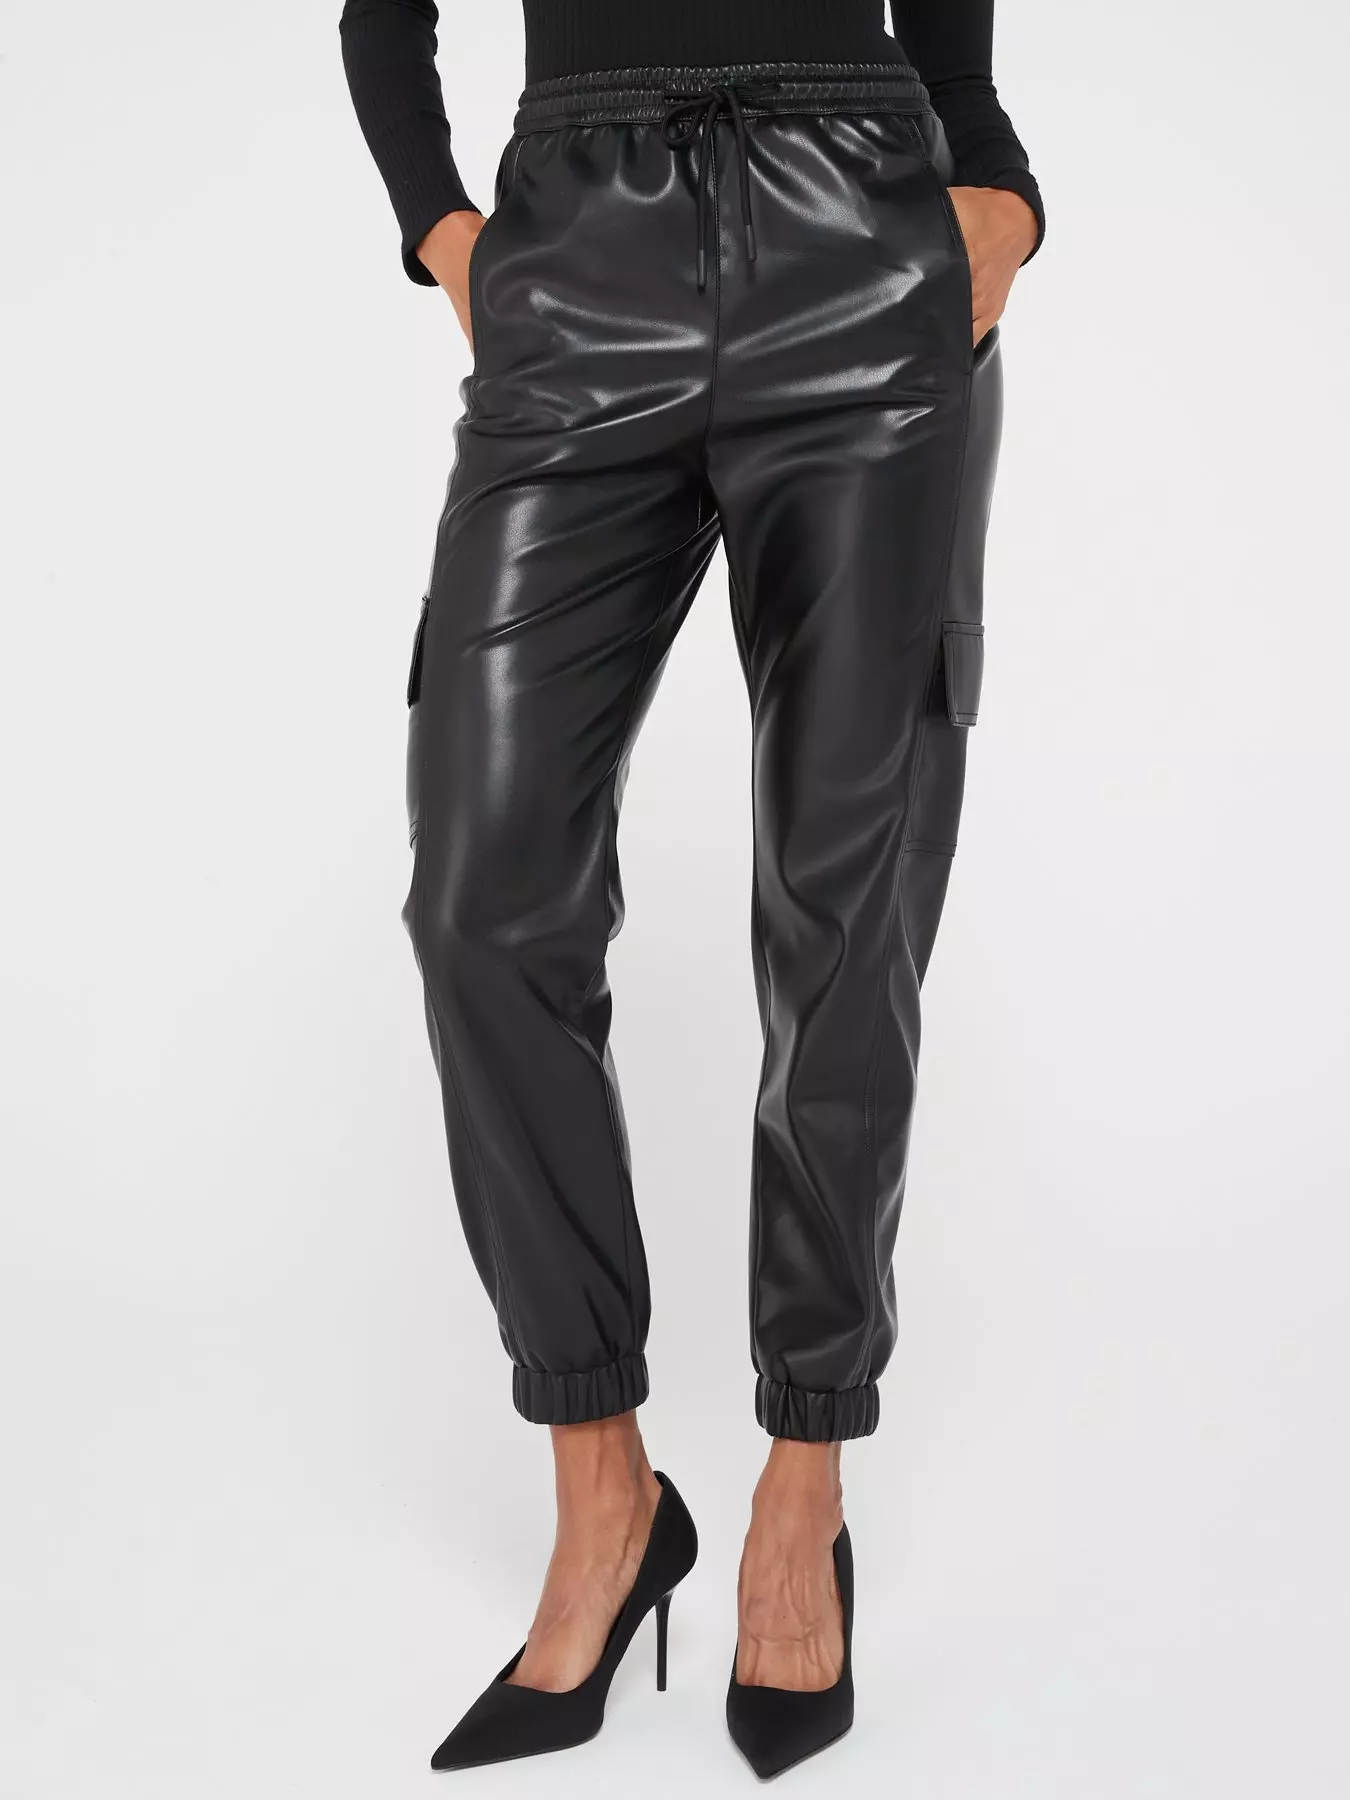 Women's Faux leather Boot cut Trousers Black coated Pants + Belt UK 6-14